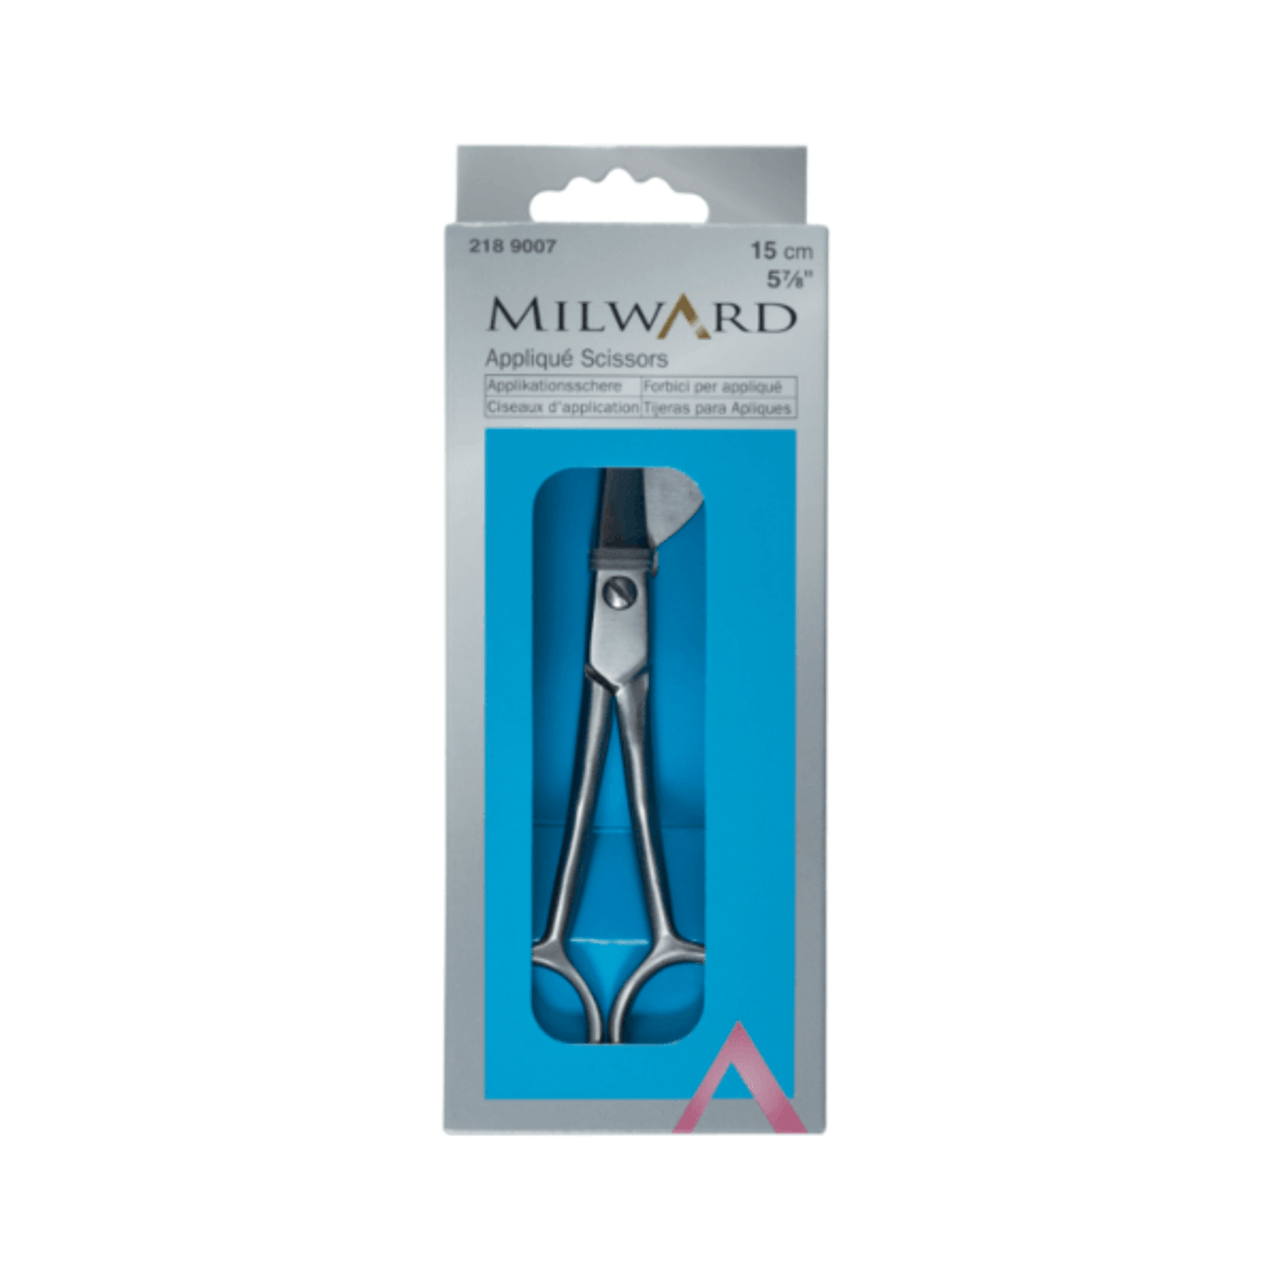 Versatile 15cm Milward Appliqué Scissors: Perfect for Every Project